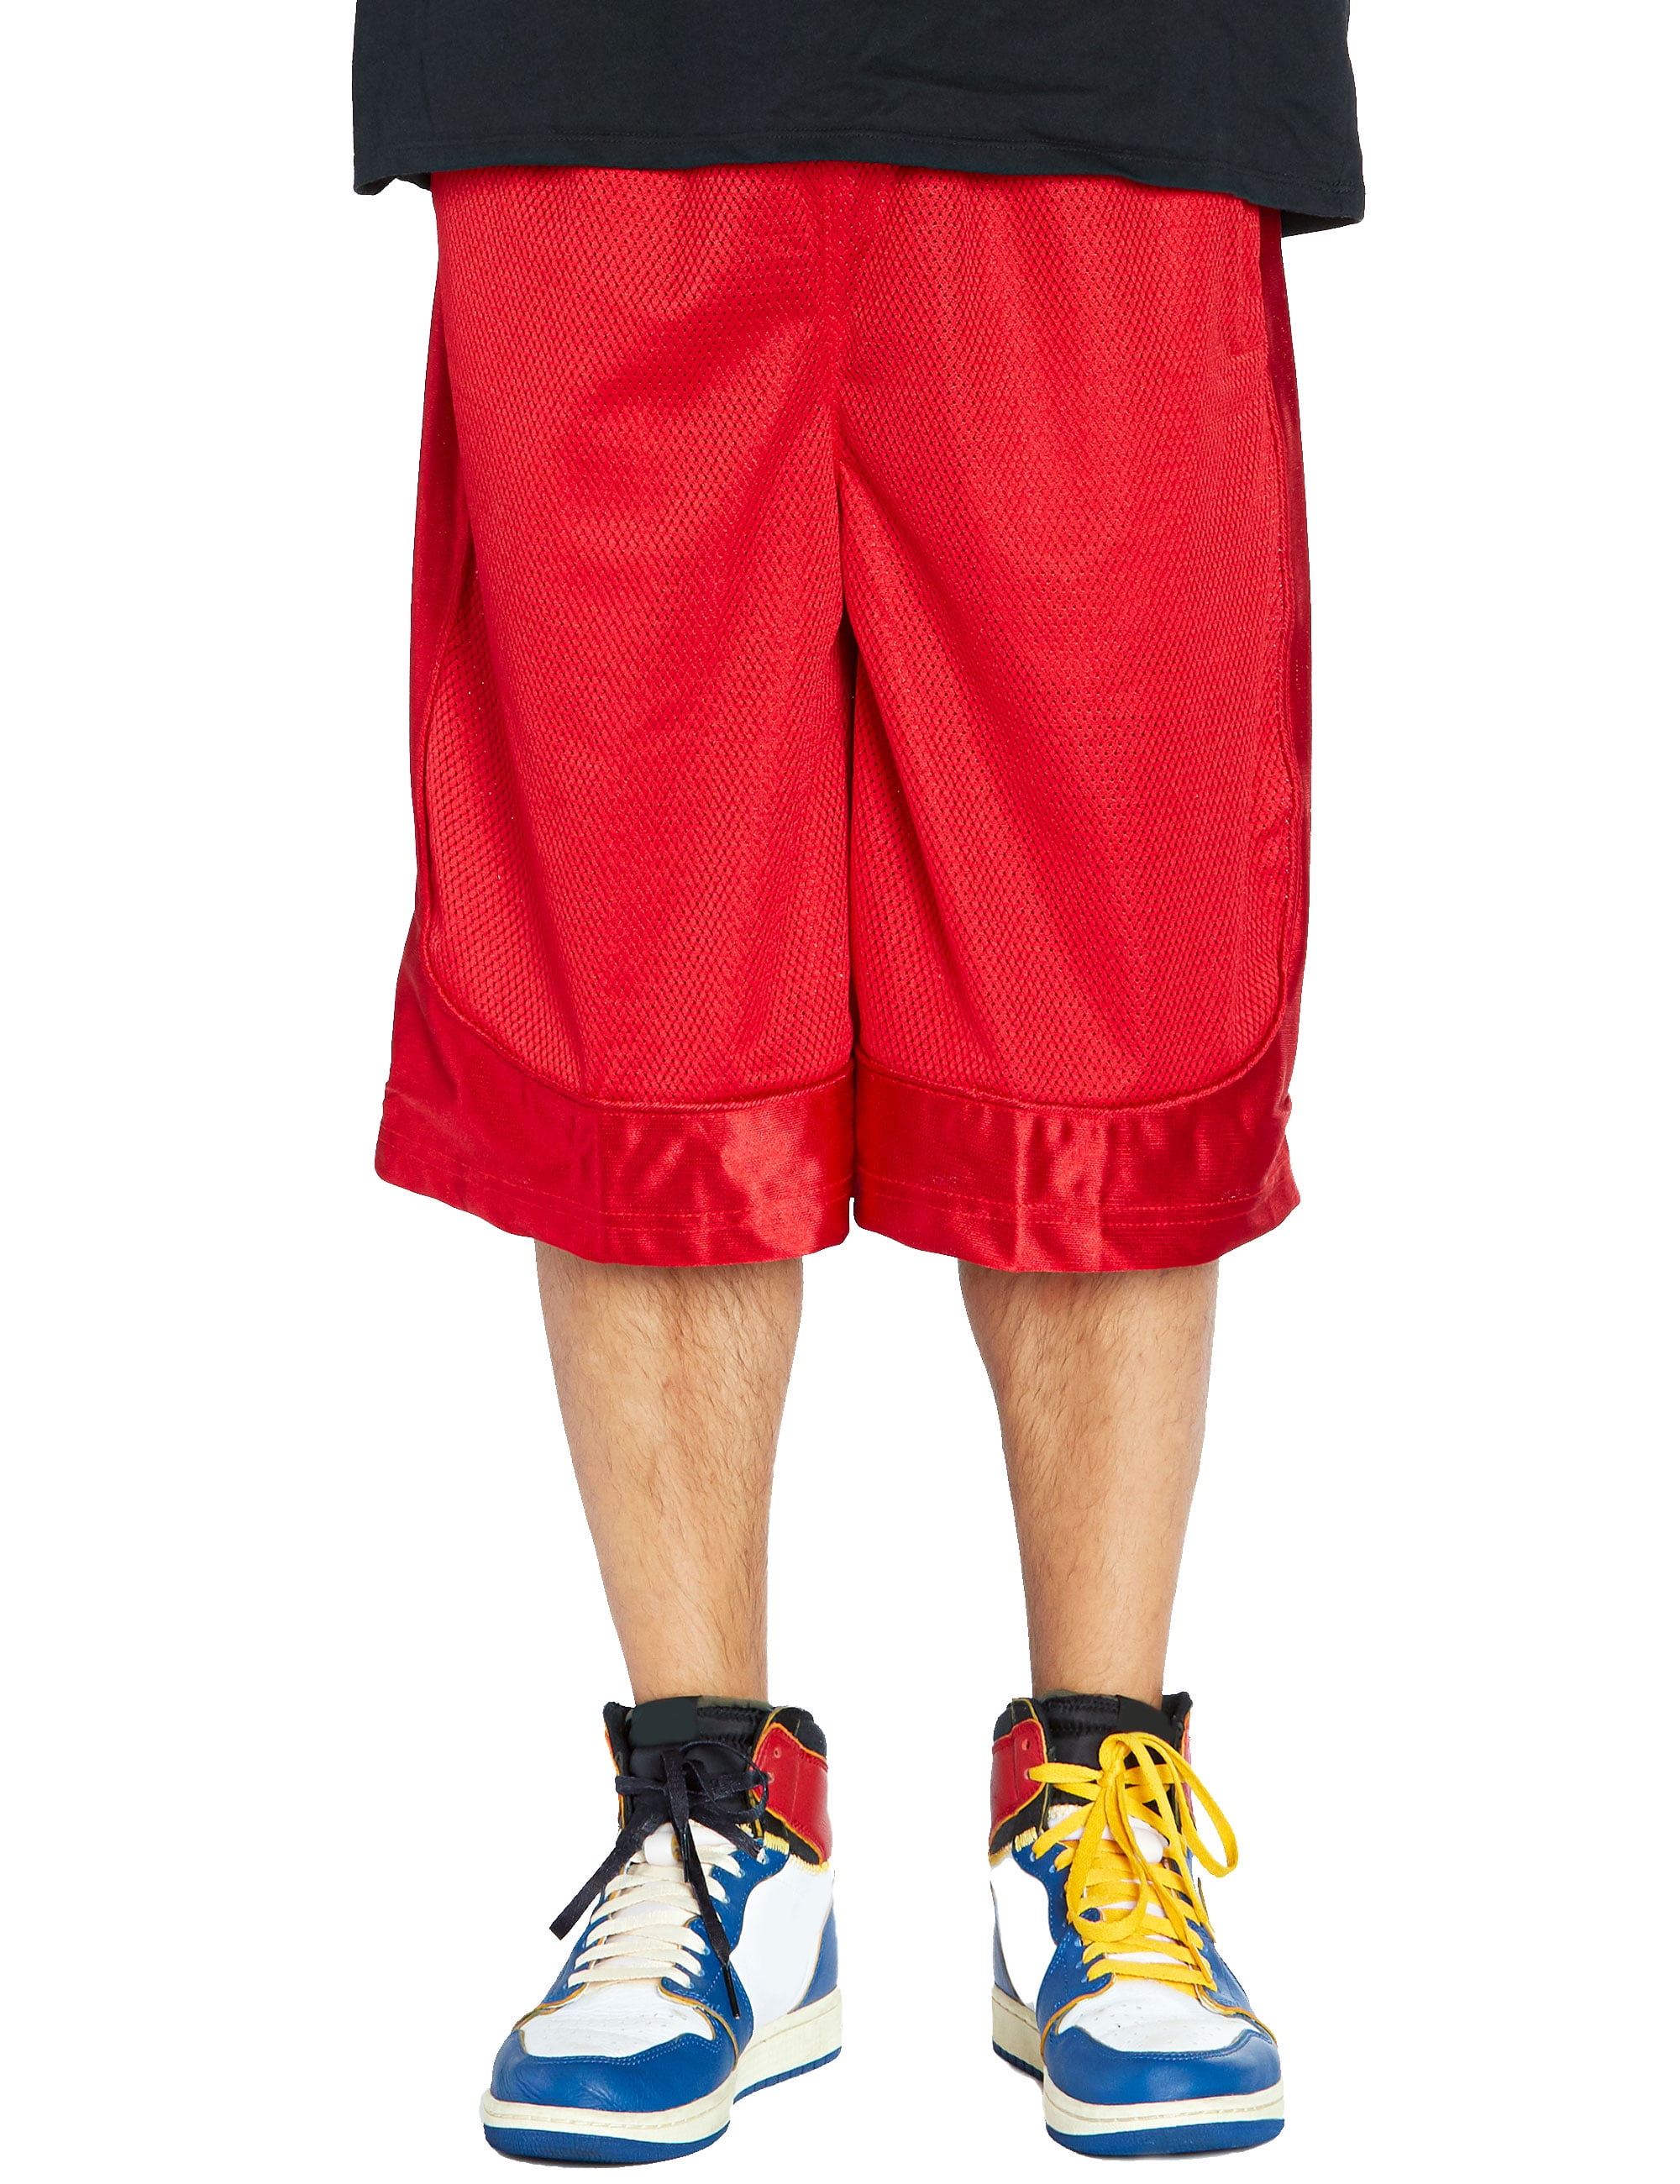 Shaka Wear Men's Basketball Shorts Mesh Workout Gym Sports Active Running Athletic Pants with Pockets Regular Big S ~ 5XL 